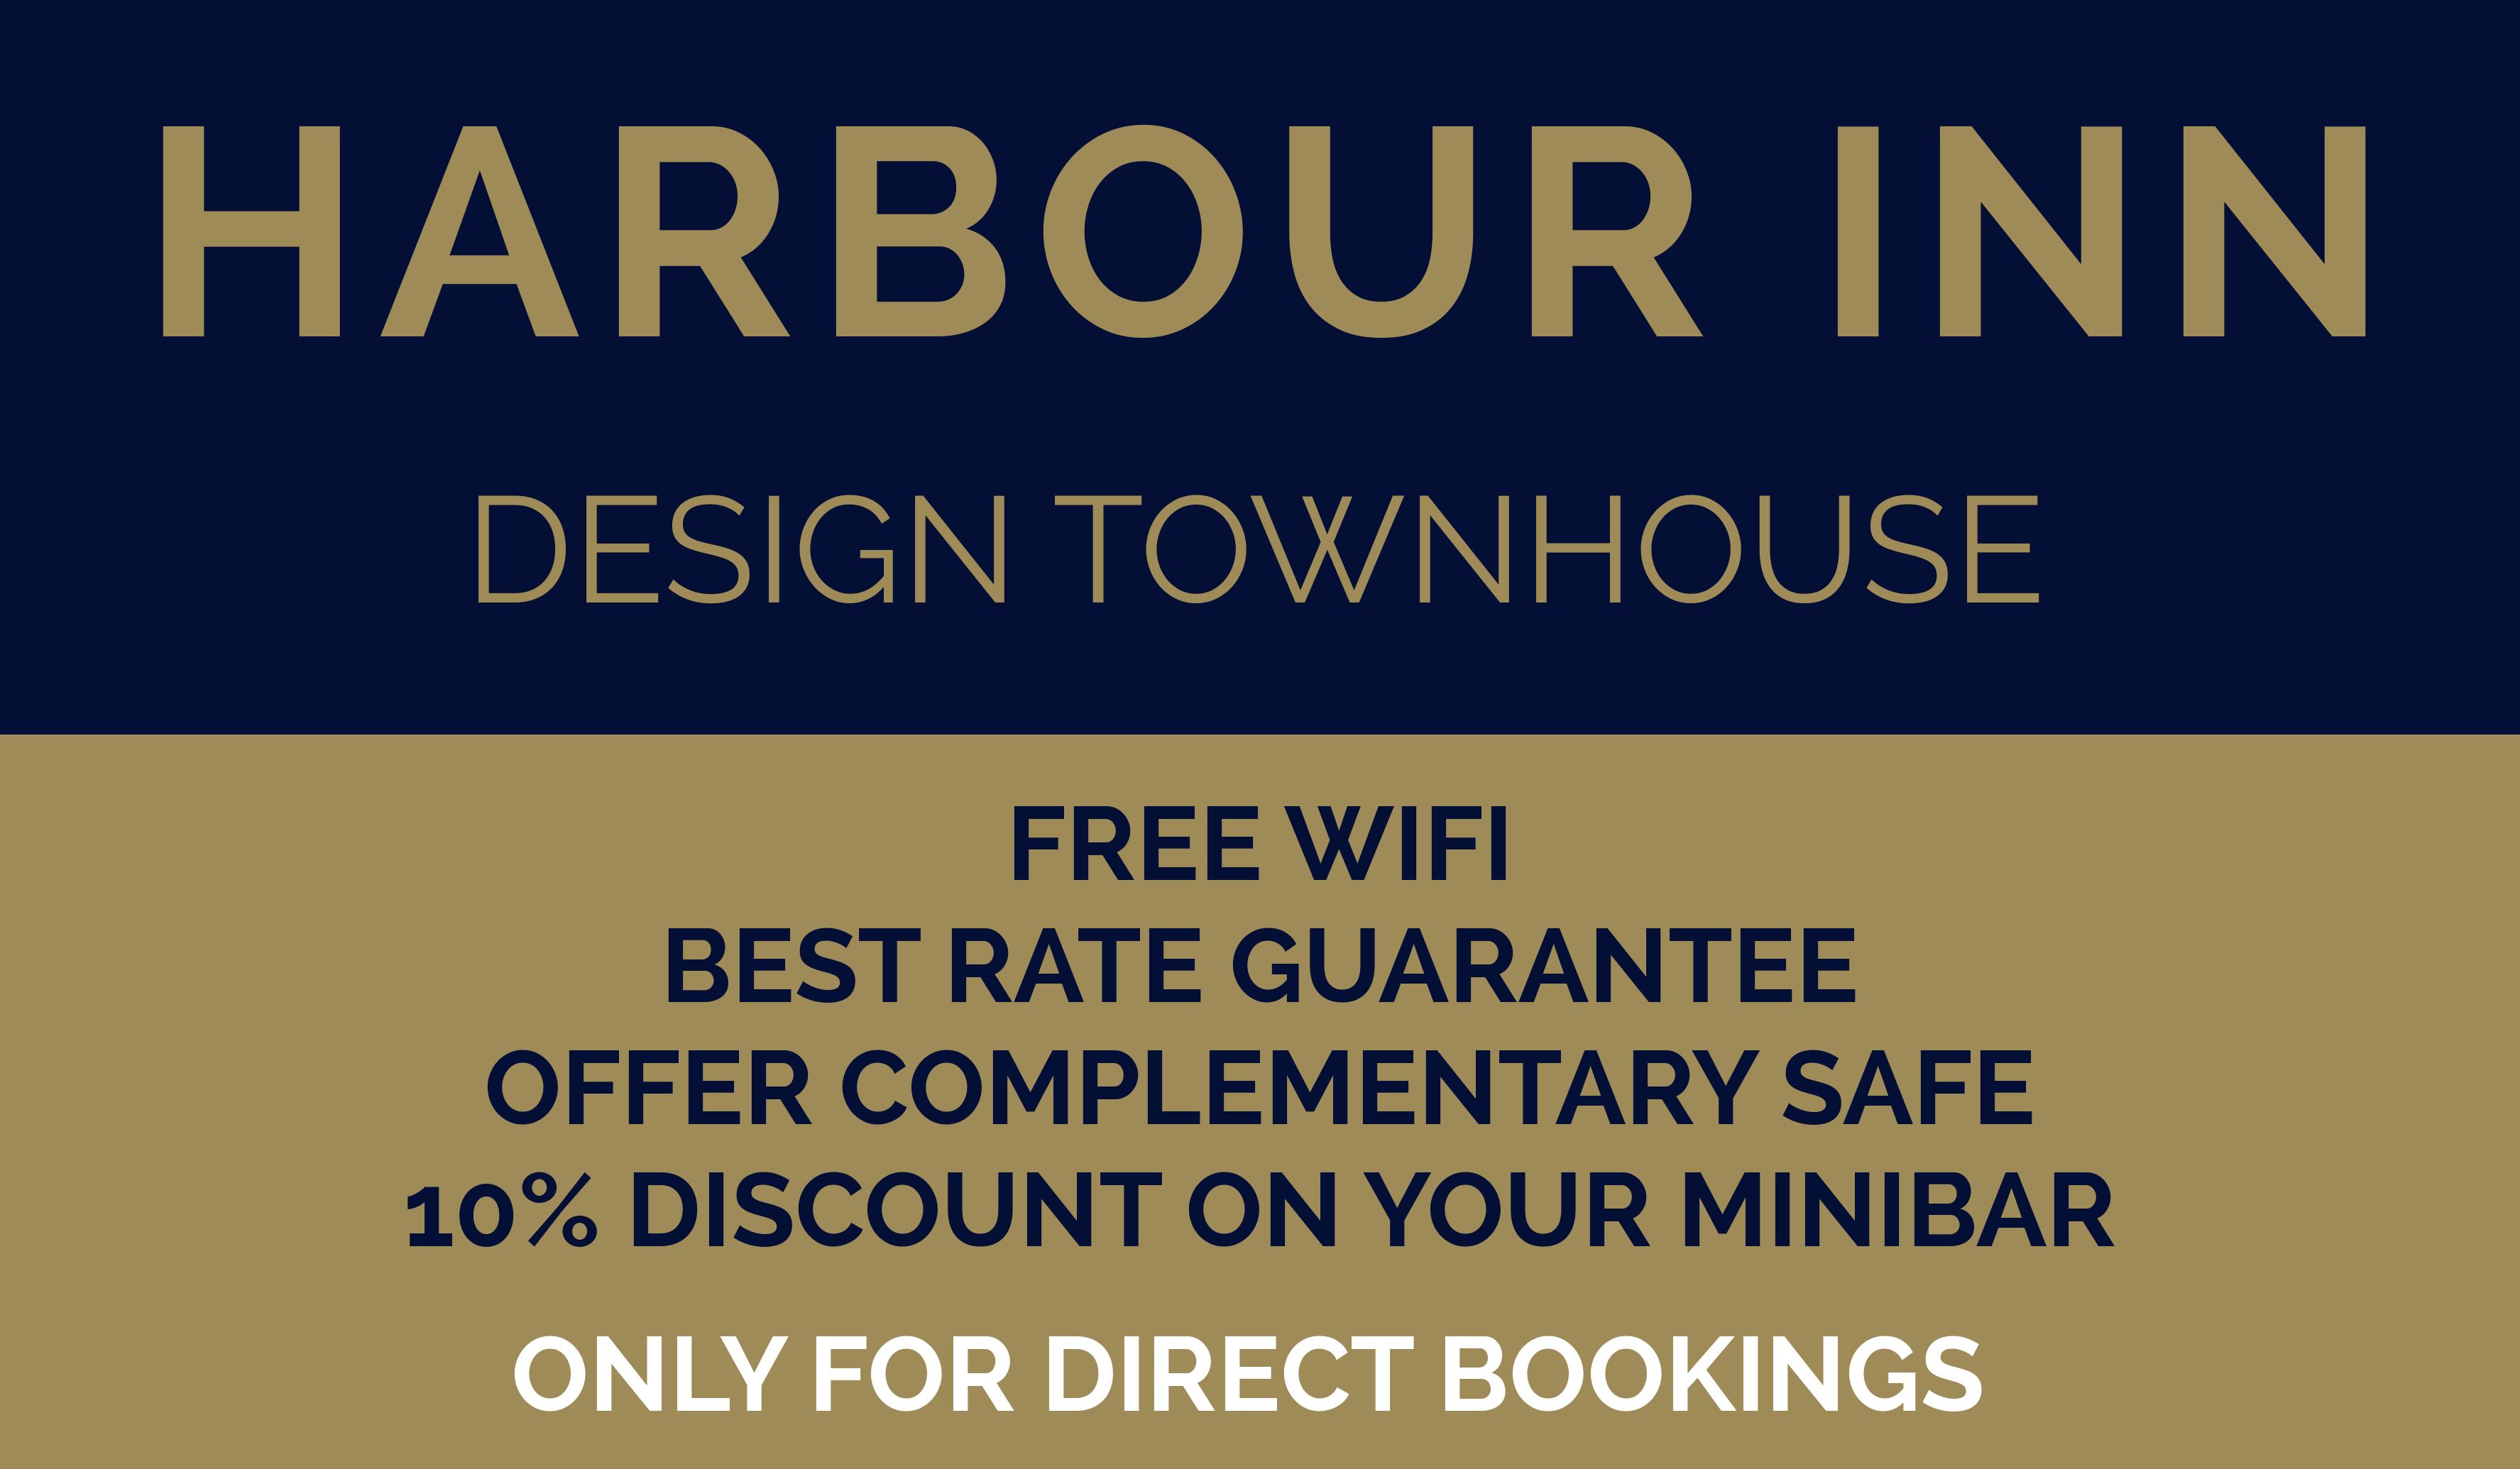 Harbour Inn Design Townhouse\ title=